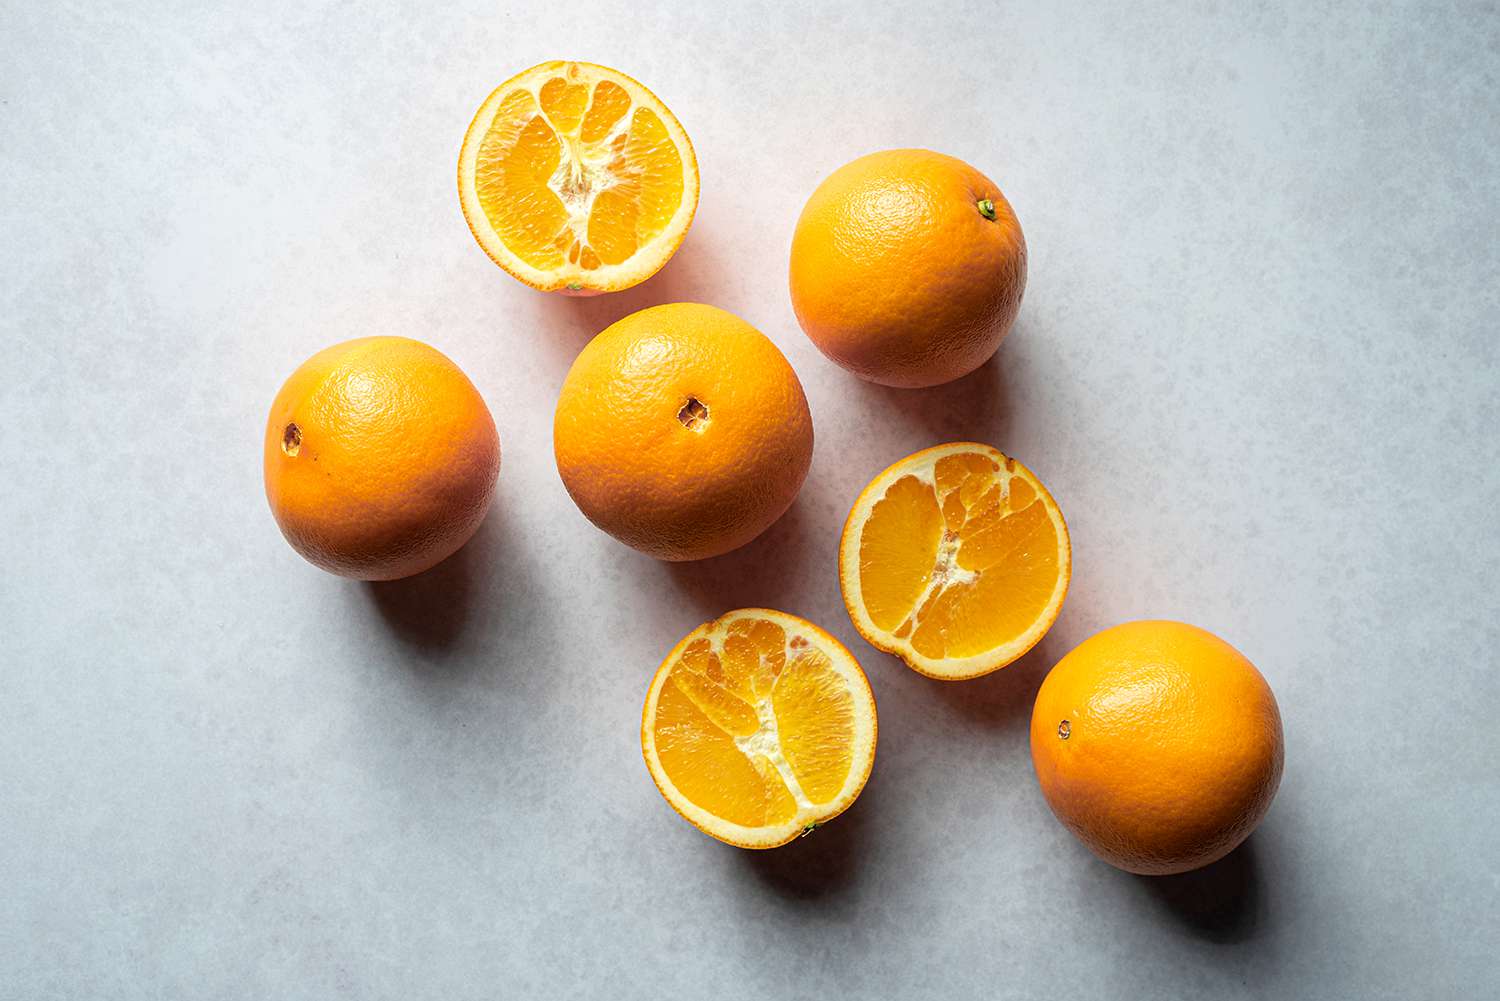 Citrus Selection: Valencia Oranges vs Navel Oranges